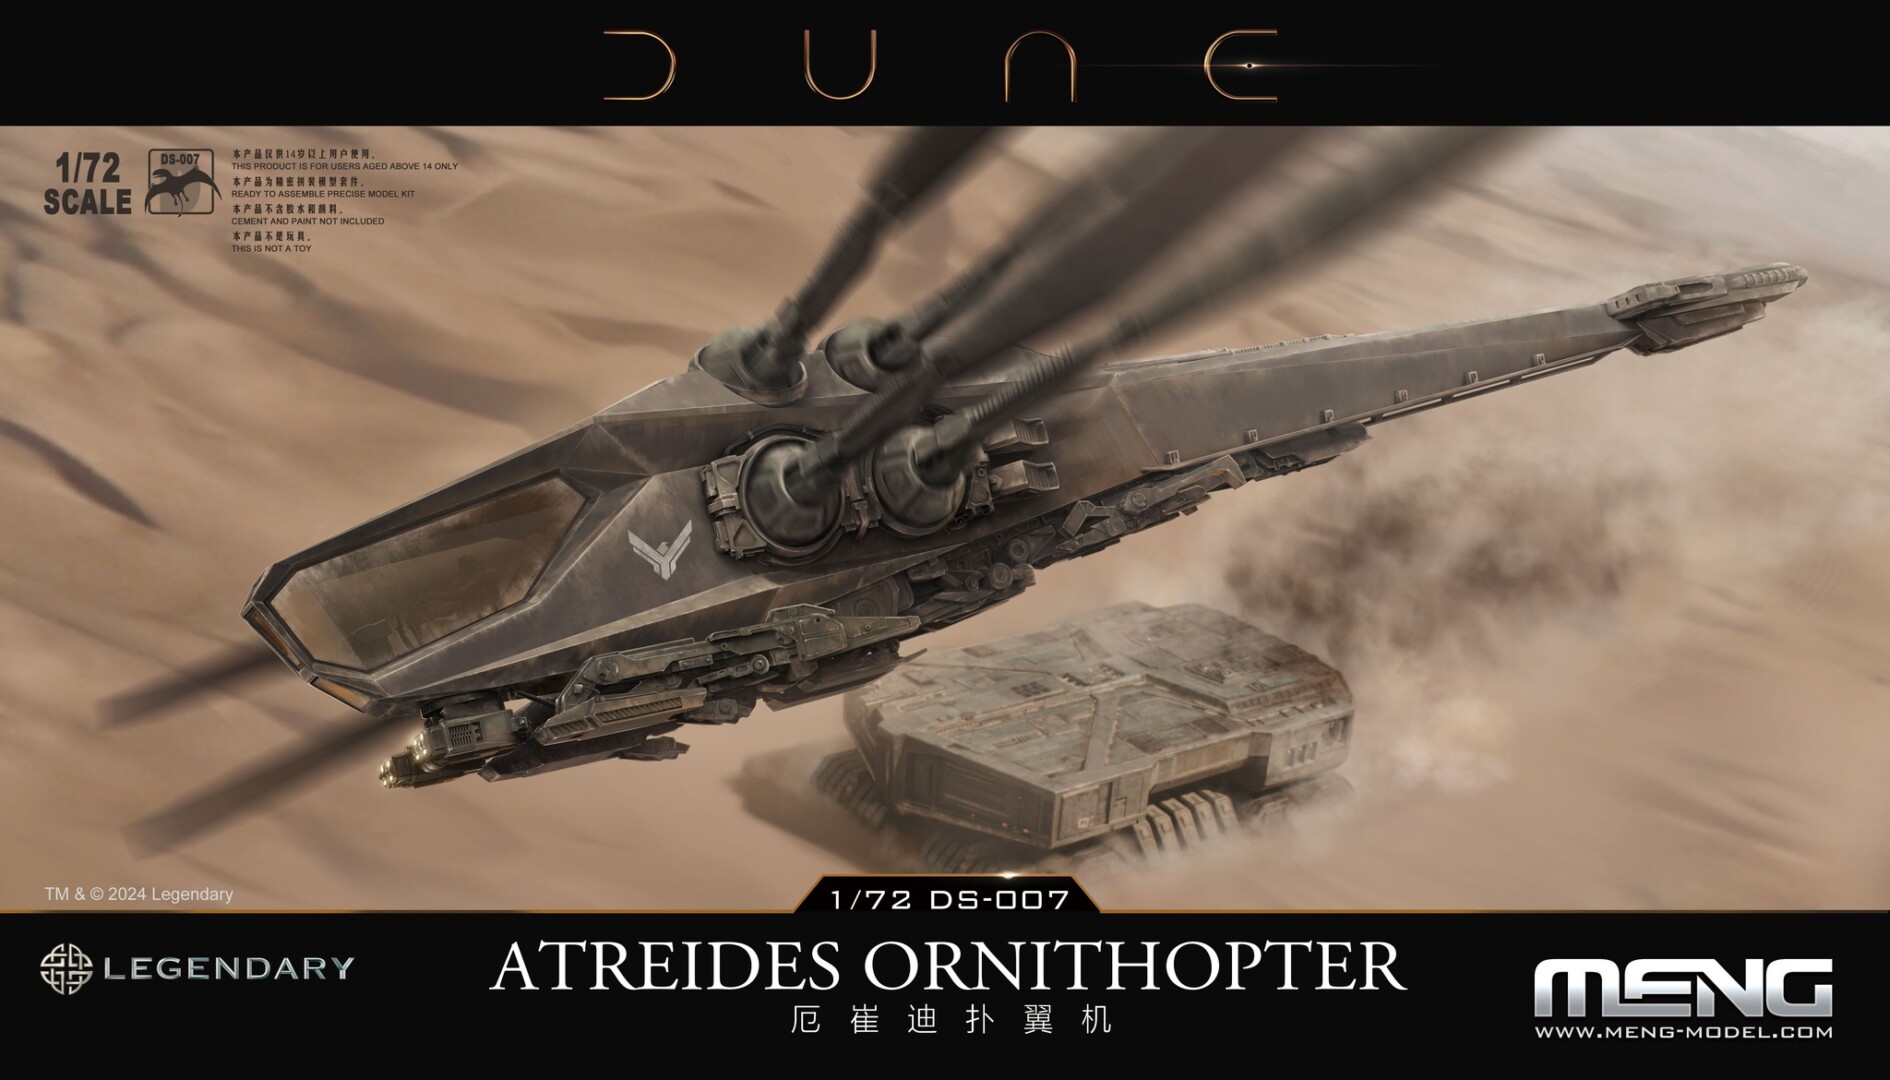 Atreides Ornithopter (Dune, DS-007) / 1:72 / Meng Model